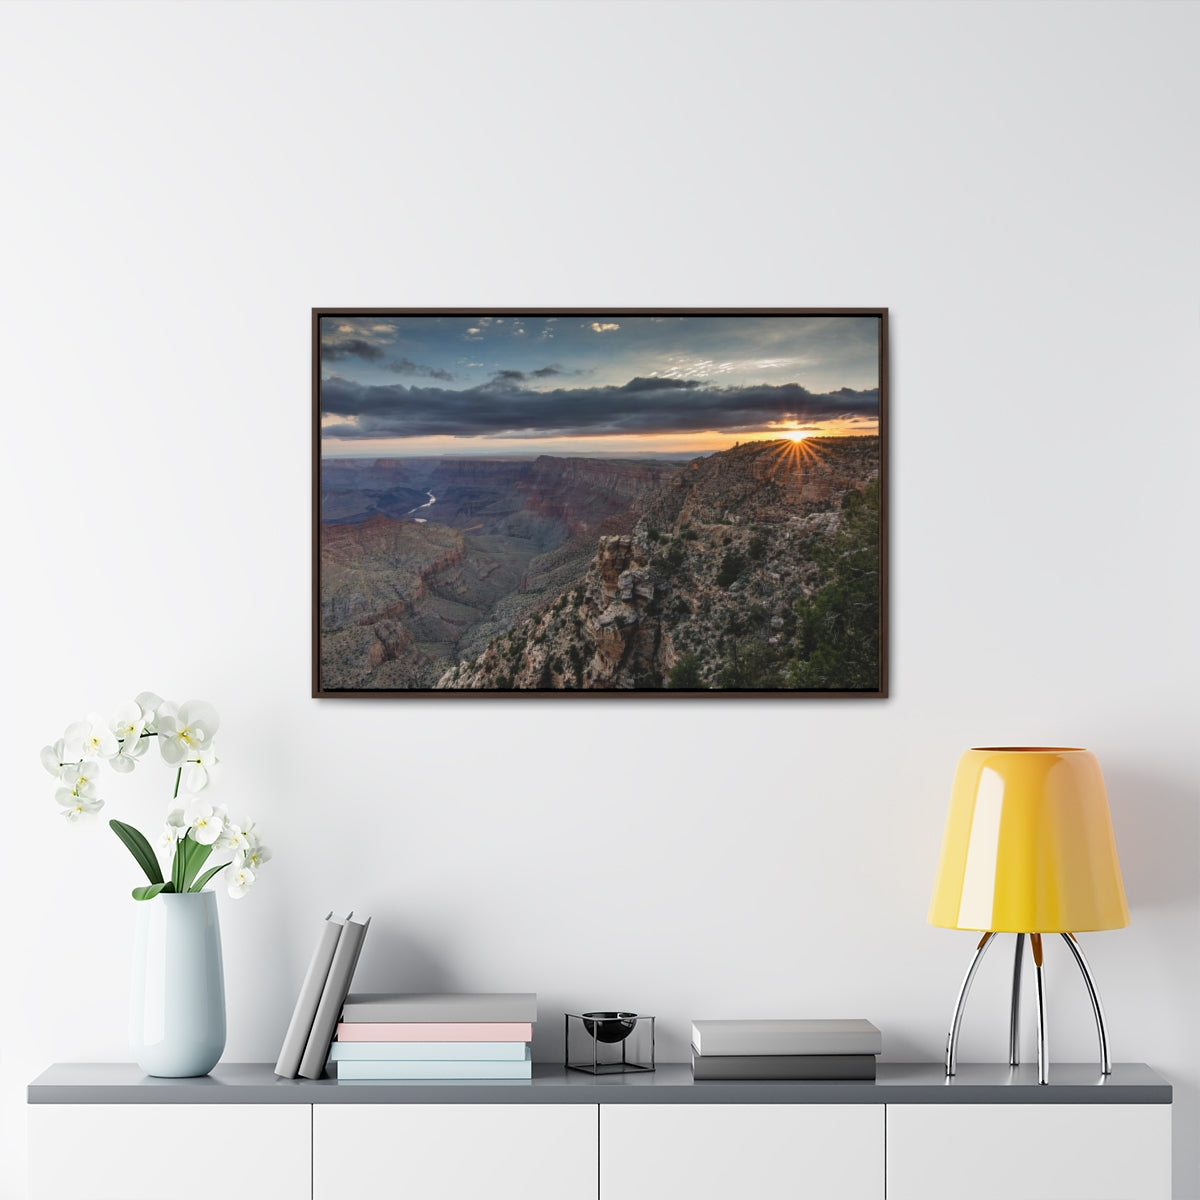 Grand Canyon Sunrise Canvas Print